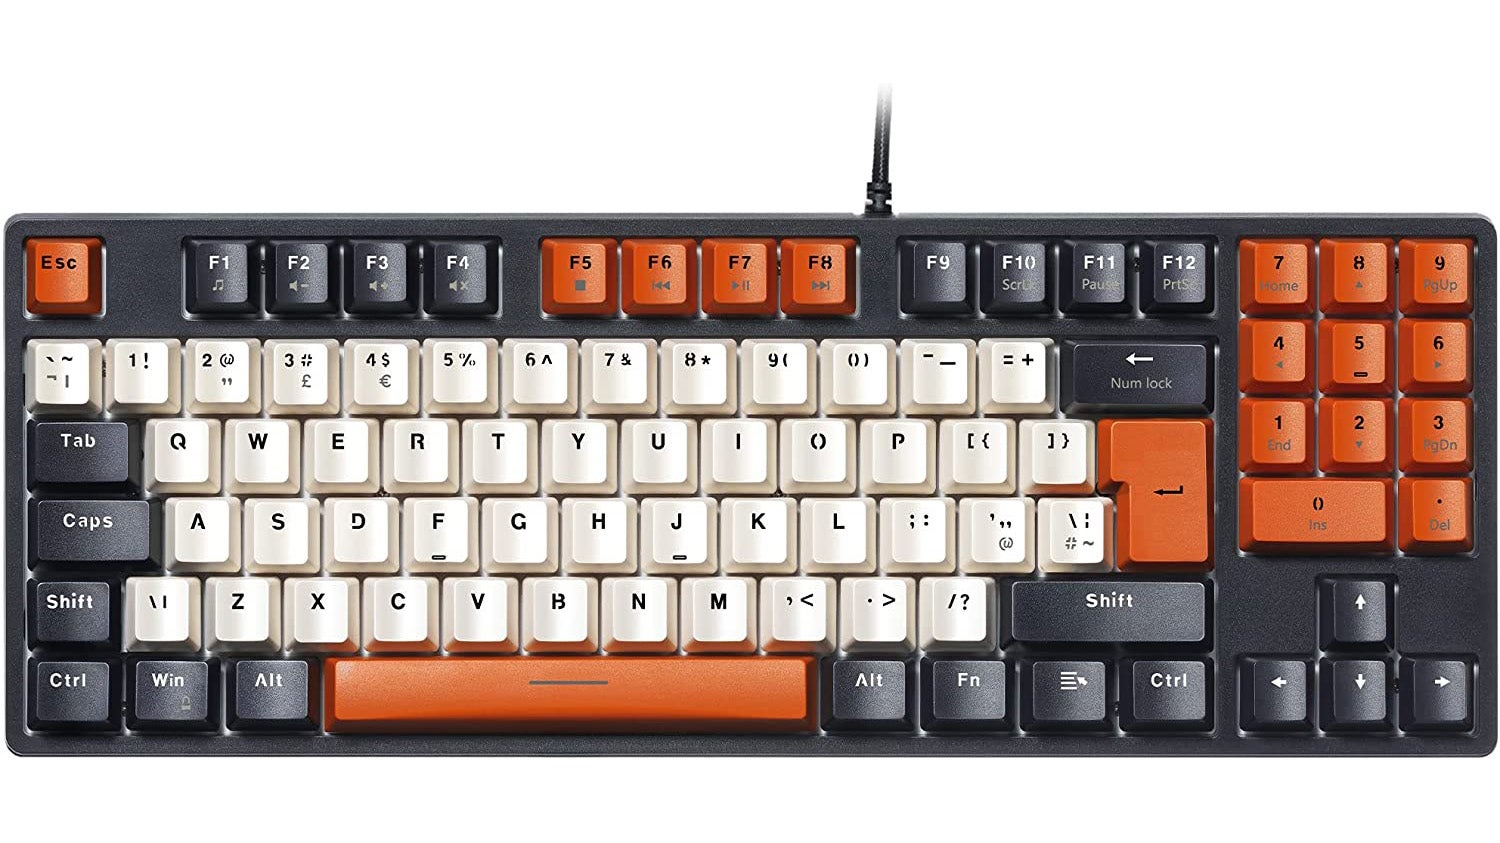 Grab this unusual 90-key UK mechanical keyboard for £42